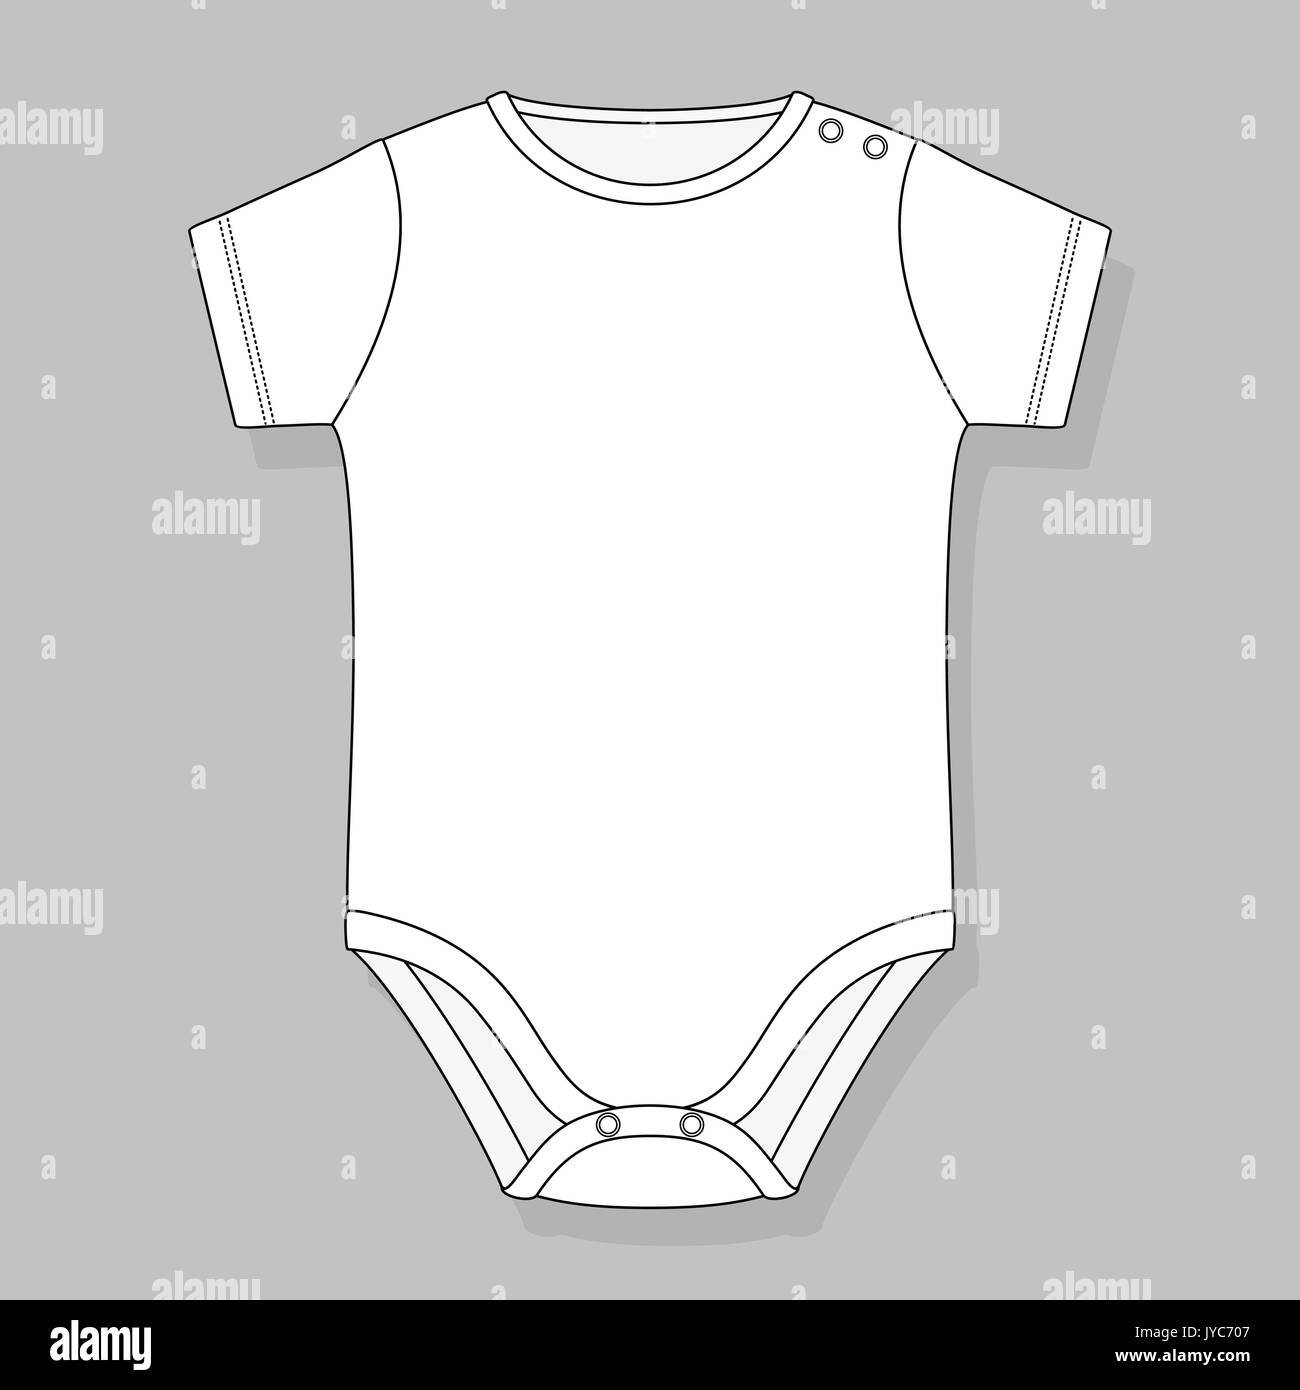 Neugeborenes Baby Body flachbild Skizze Vorlage auf grauem Hintergrund  Stock-Vektorgrafik - Alamy